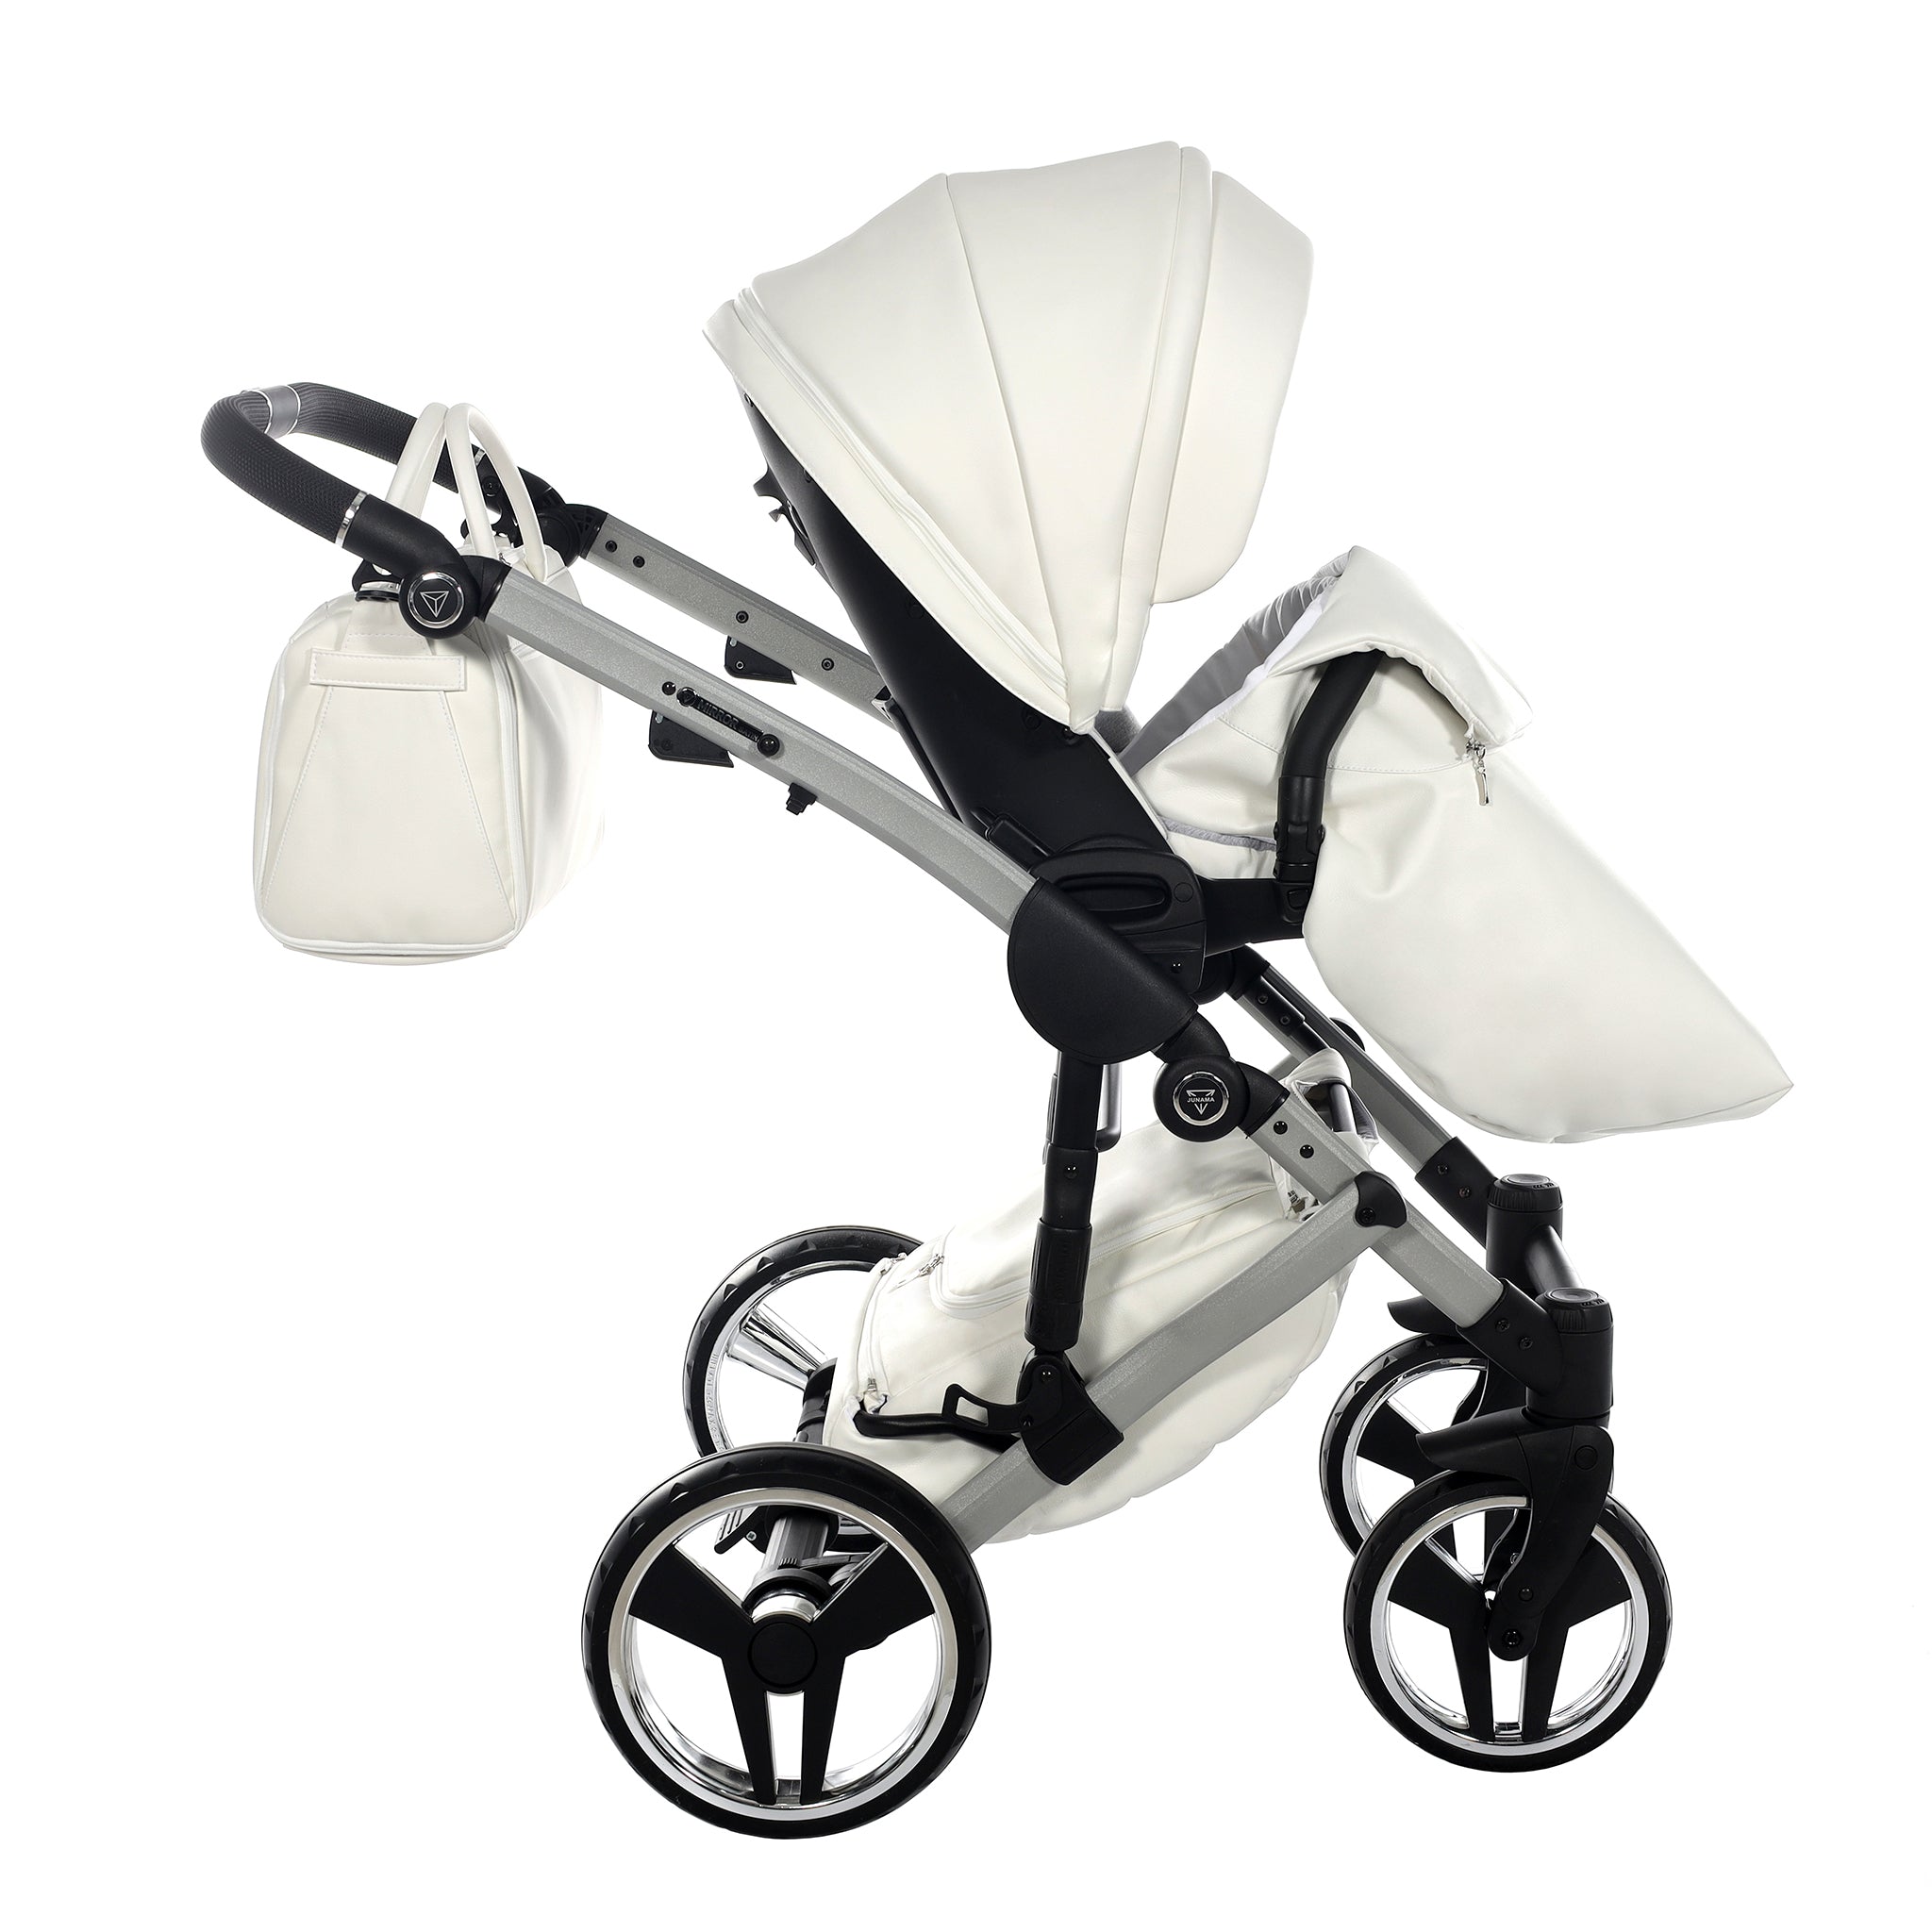 Junama Mirror Satin, baby prams or stroller 2 in 1 - Silver and Silver, Code number: JUNMSAT04